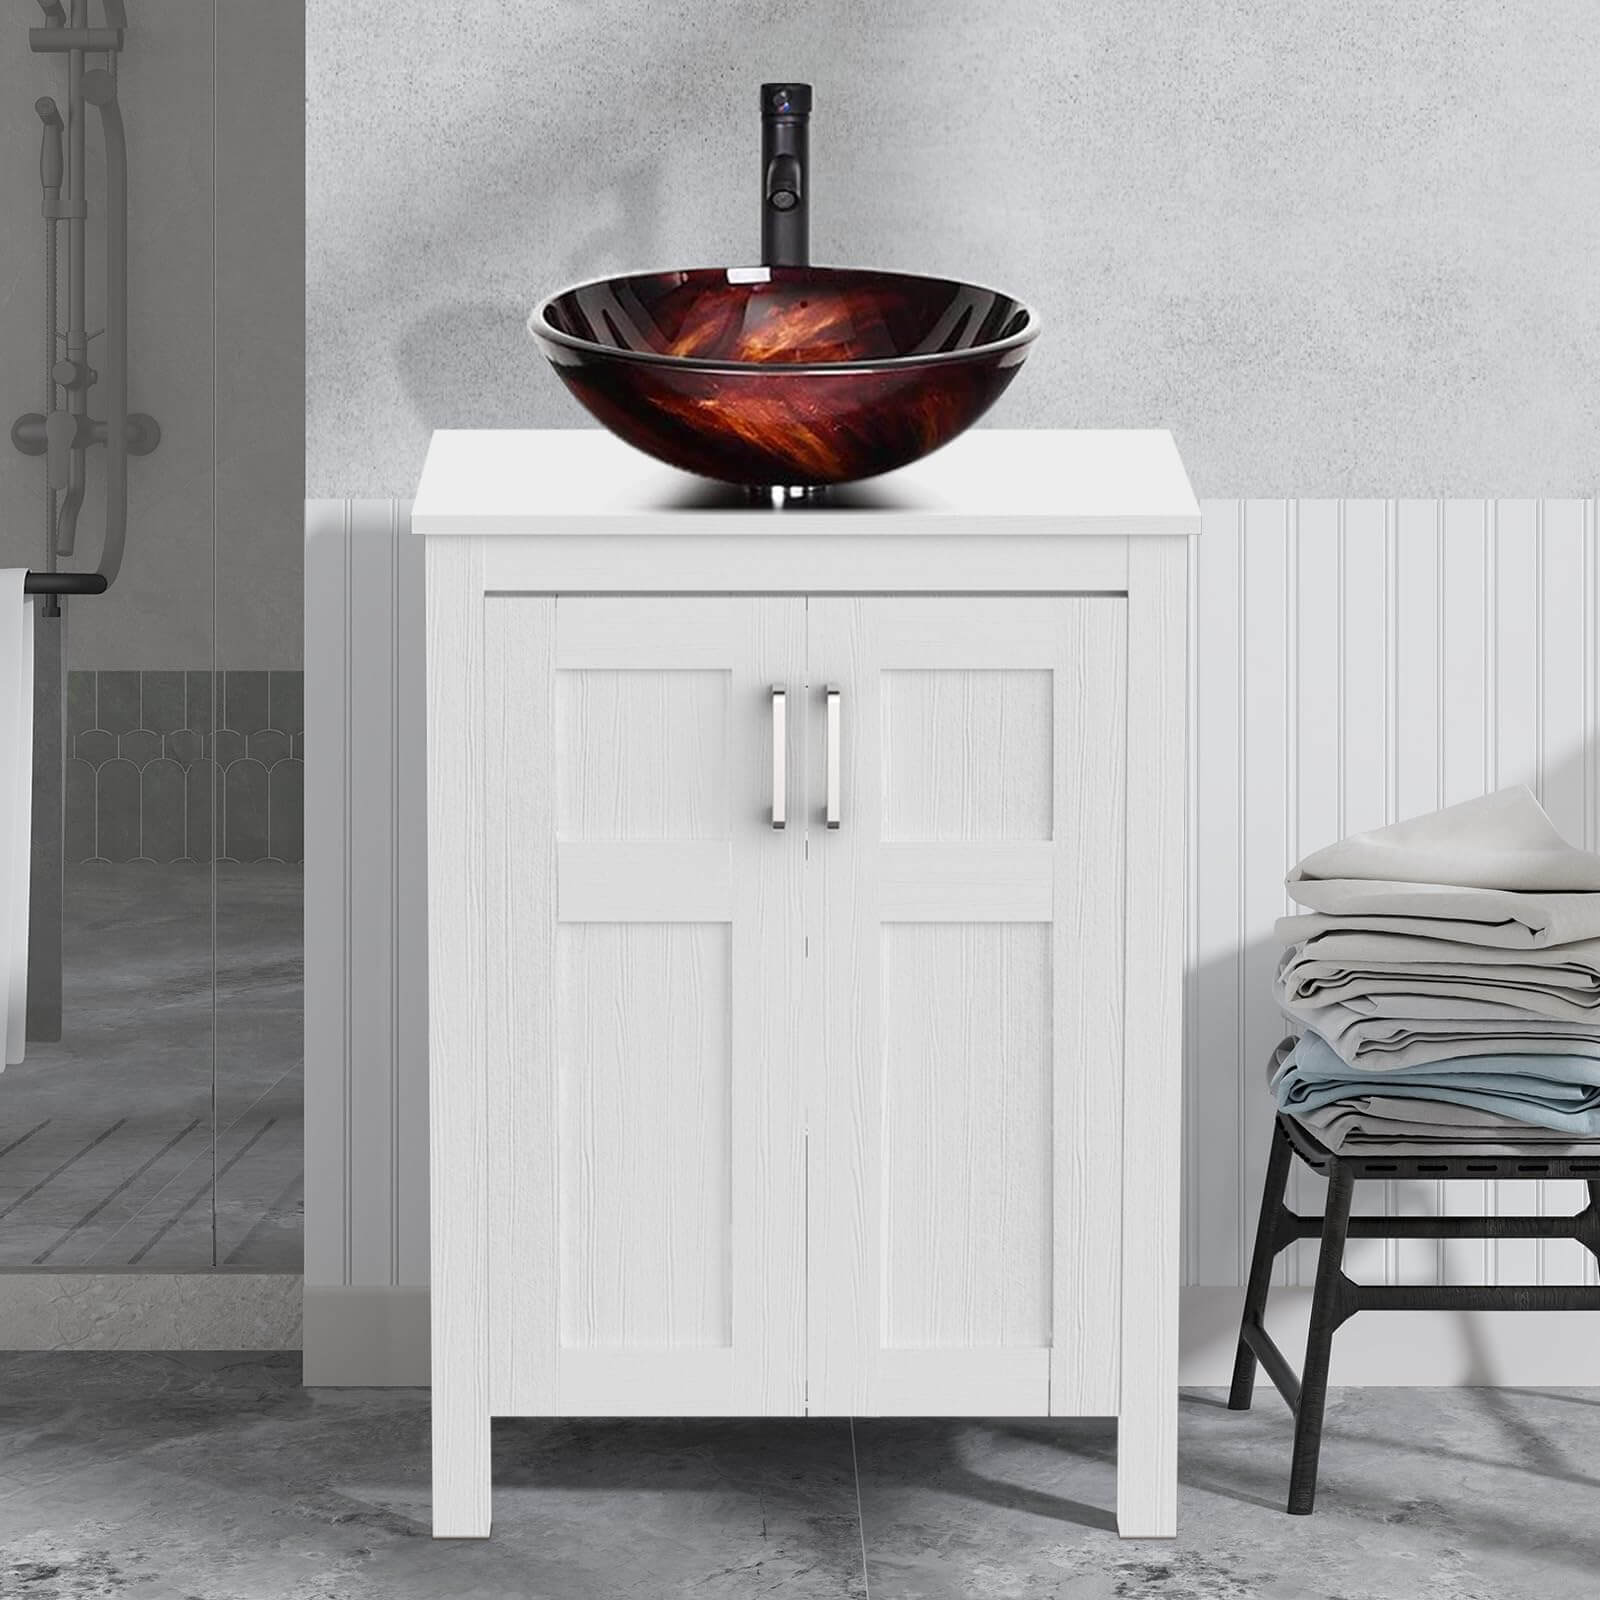 Elecwish White Bathroom Vanity and Flame Red Sink Set HW1120-WH display scene